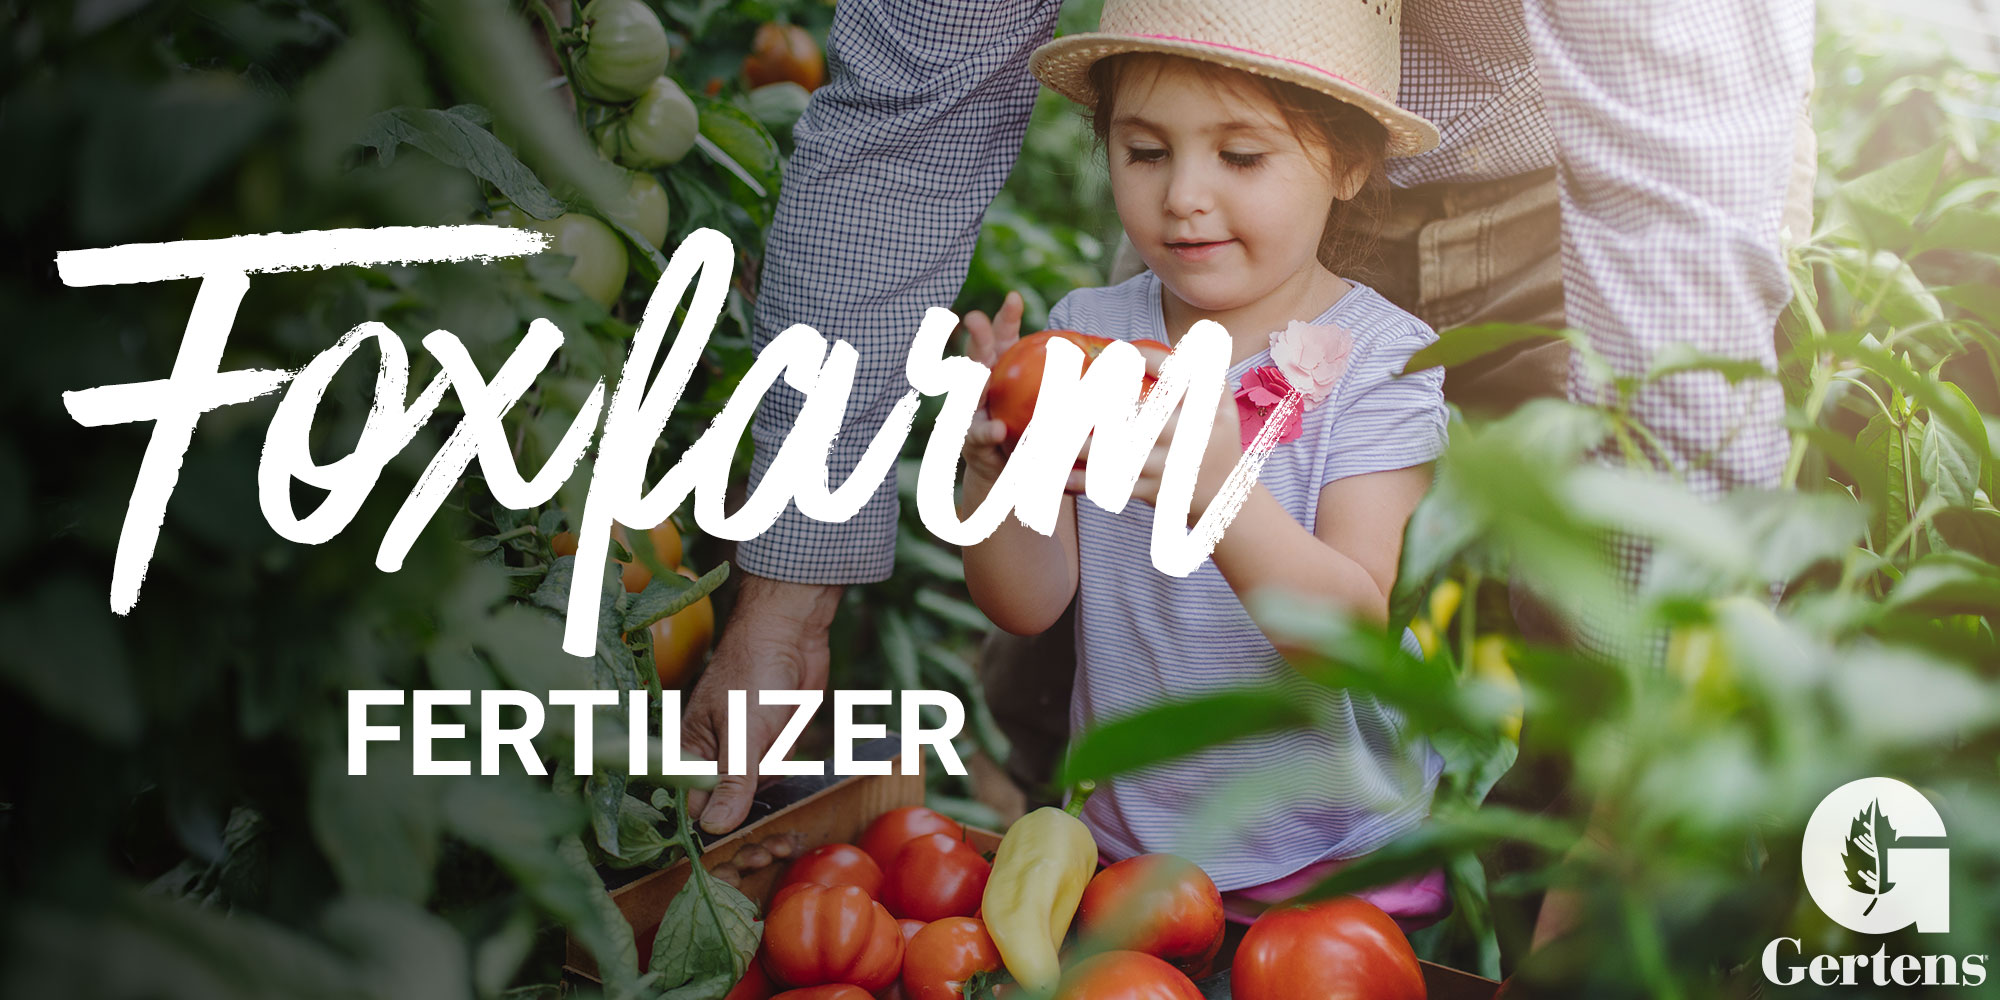 FoxFarm Fertilizer